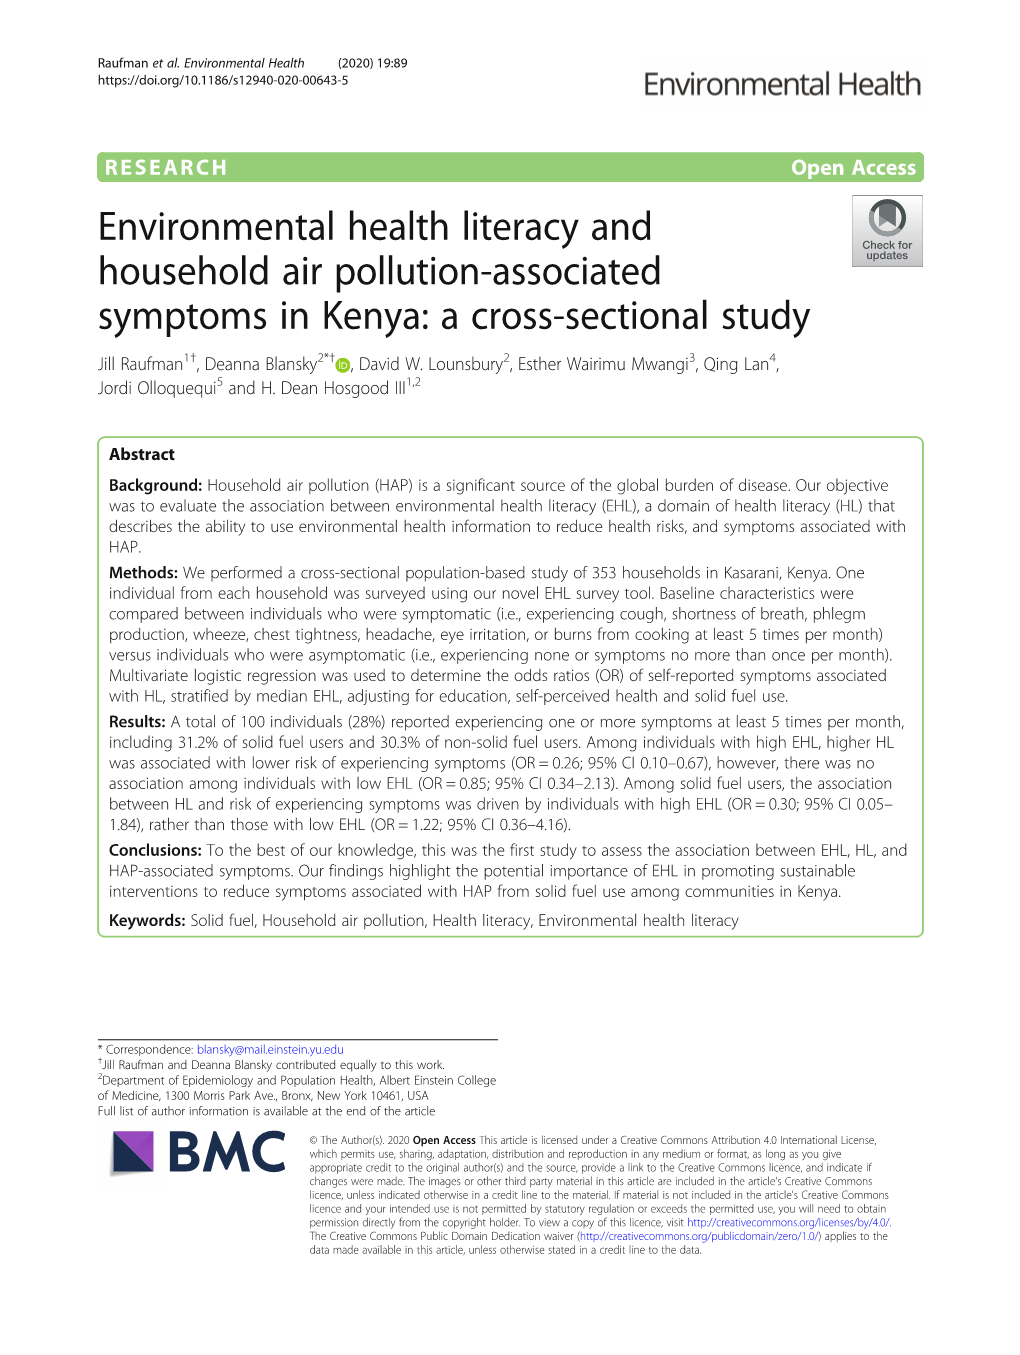 Environmental Health Literacy and Household Air Pollution-Associated Symptoms in Kenya: a Cross-Sectional Study Jill Raufman1†, Deanna Blansky2*† , David W